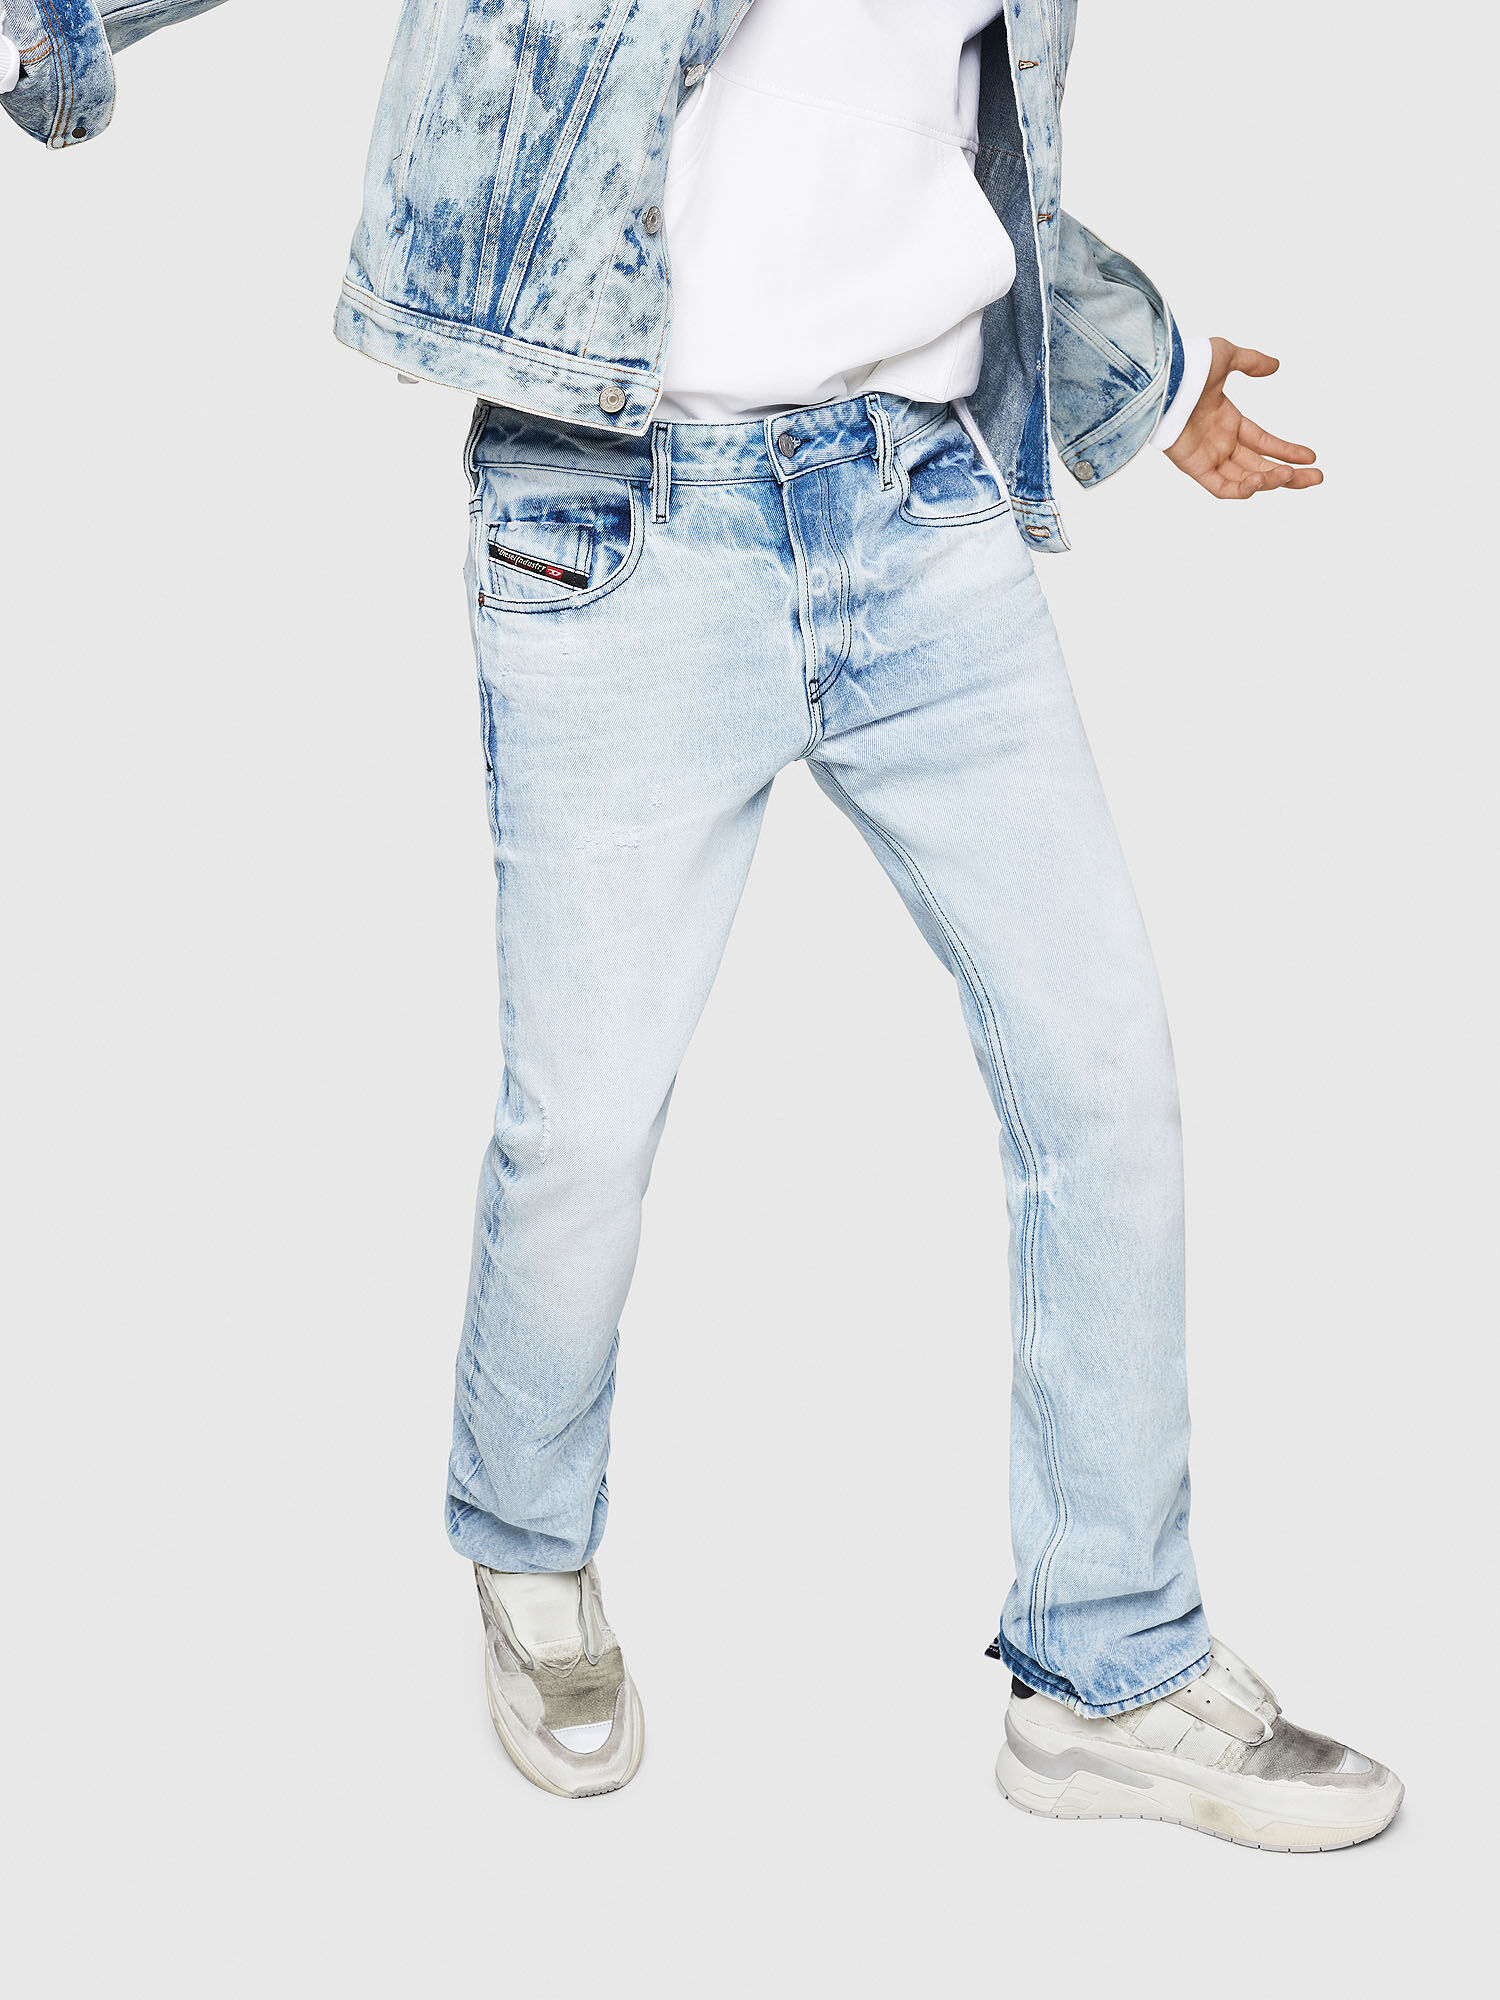 light blue bootcut jeans mens